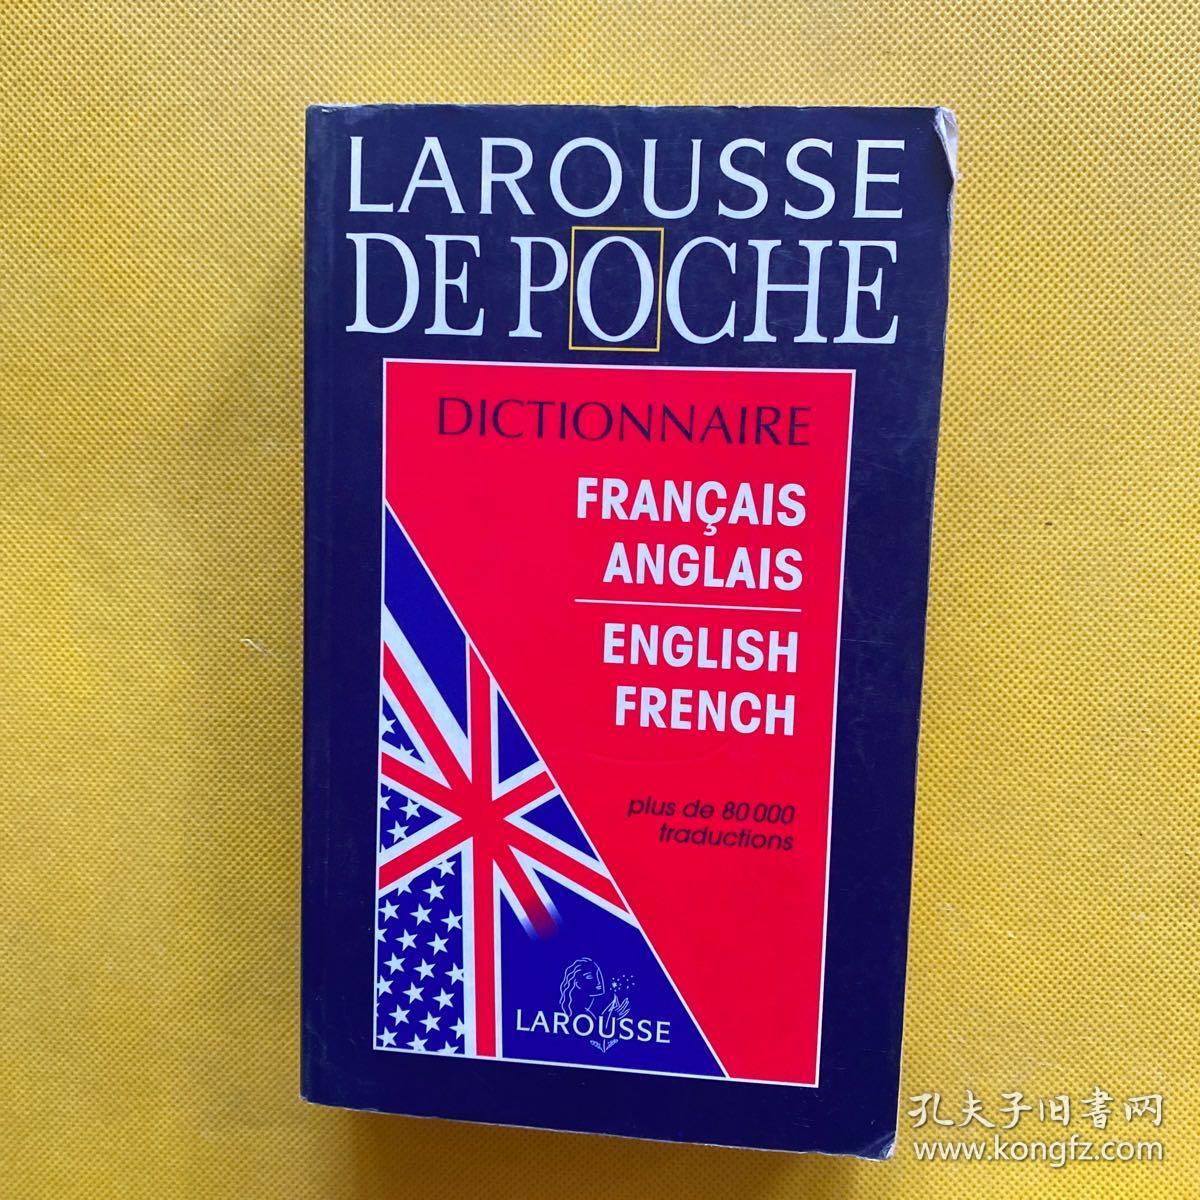 Larousse de poche dictionnaire francais-anglais, anglais-francais